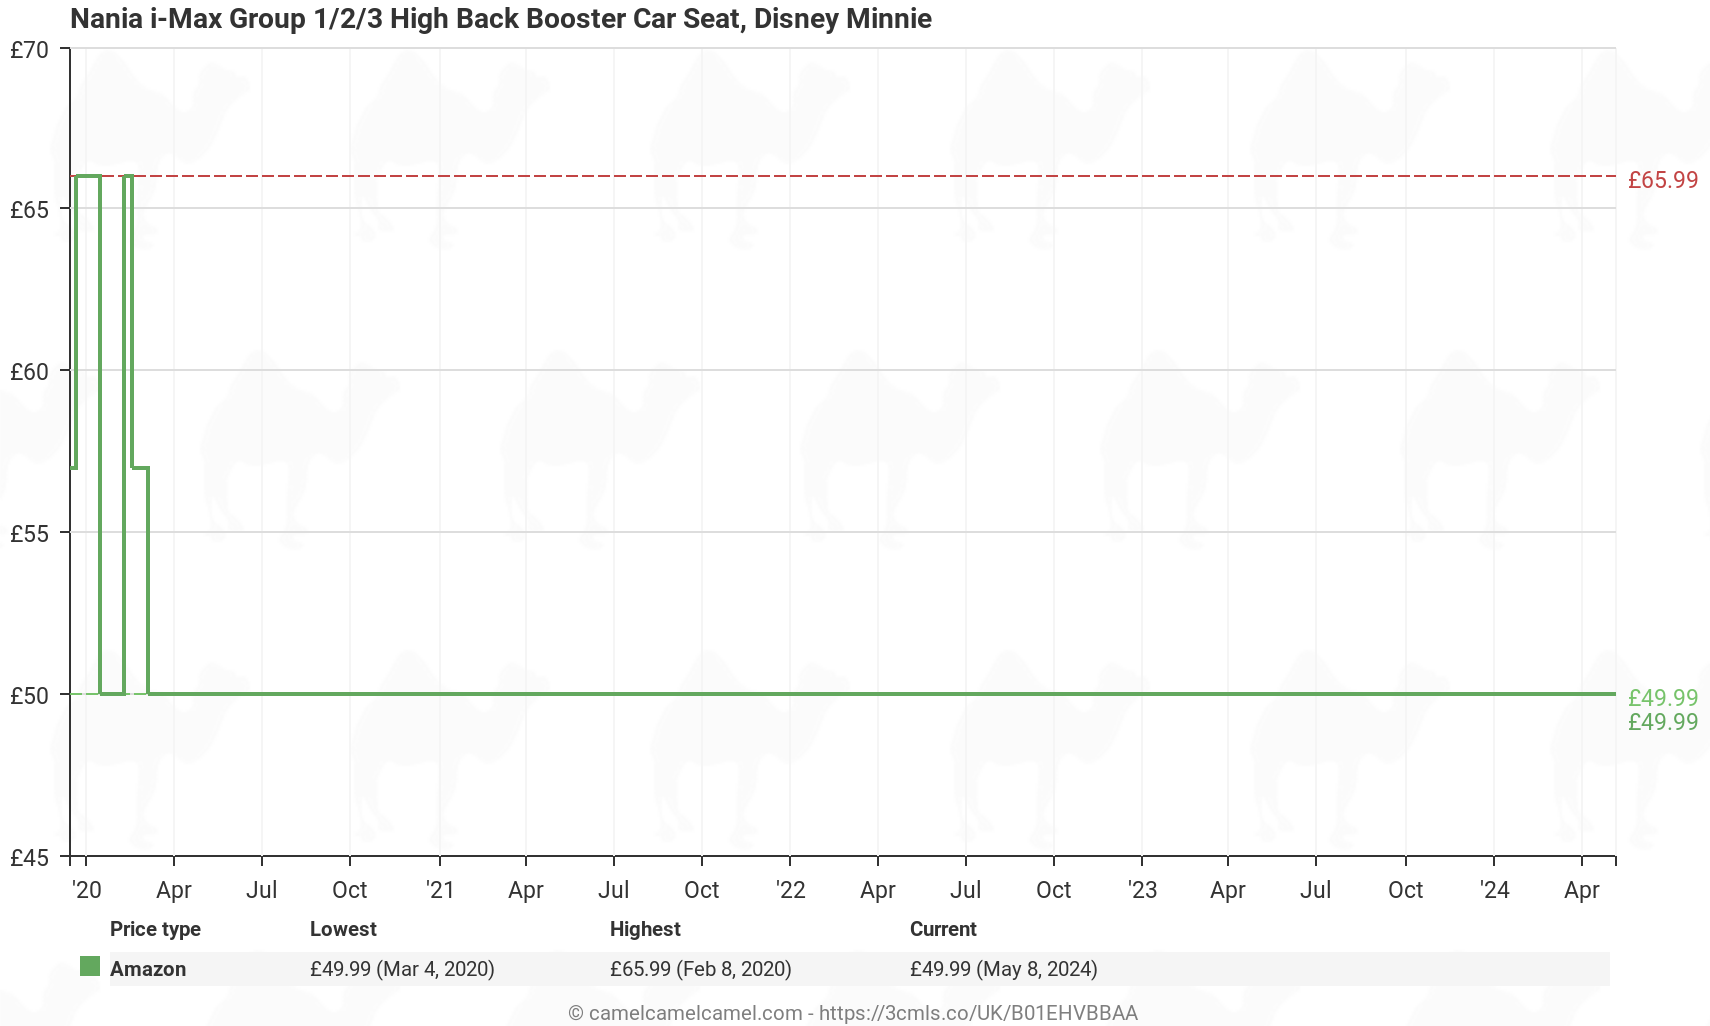 Nania i-Max Group 1/2/3 High Back Booster Car Seat, Disney Minnie - Price History: B01EHVBBAA